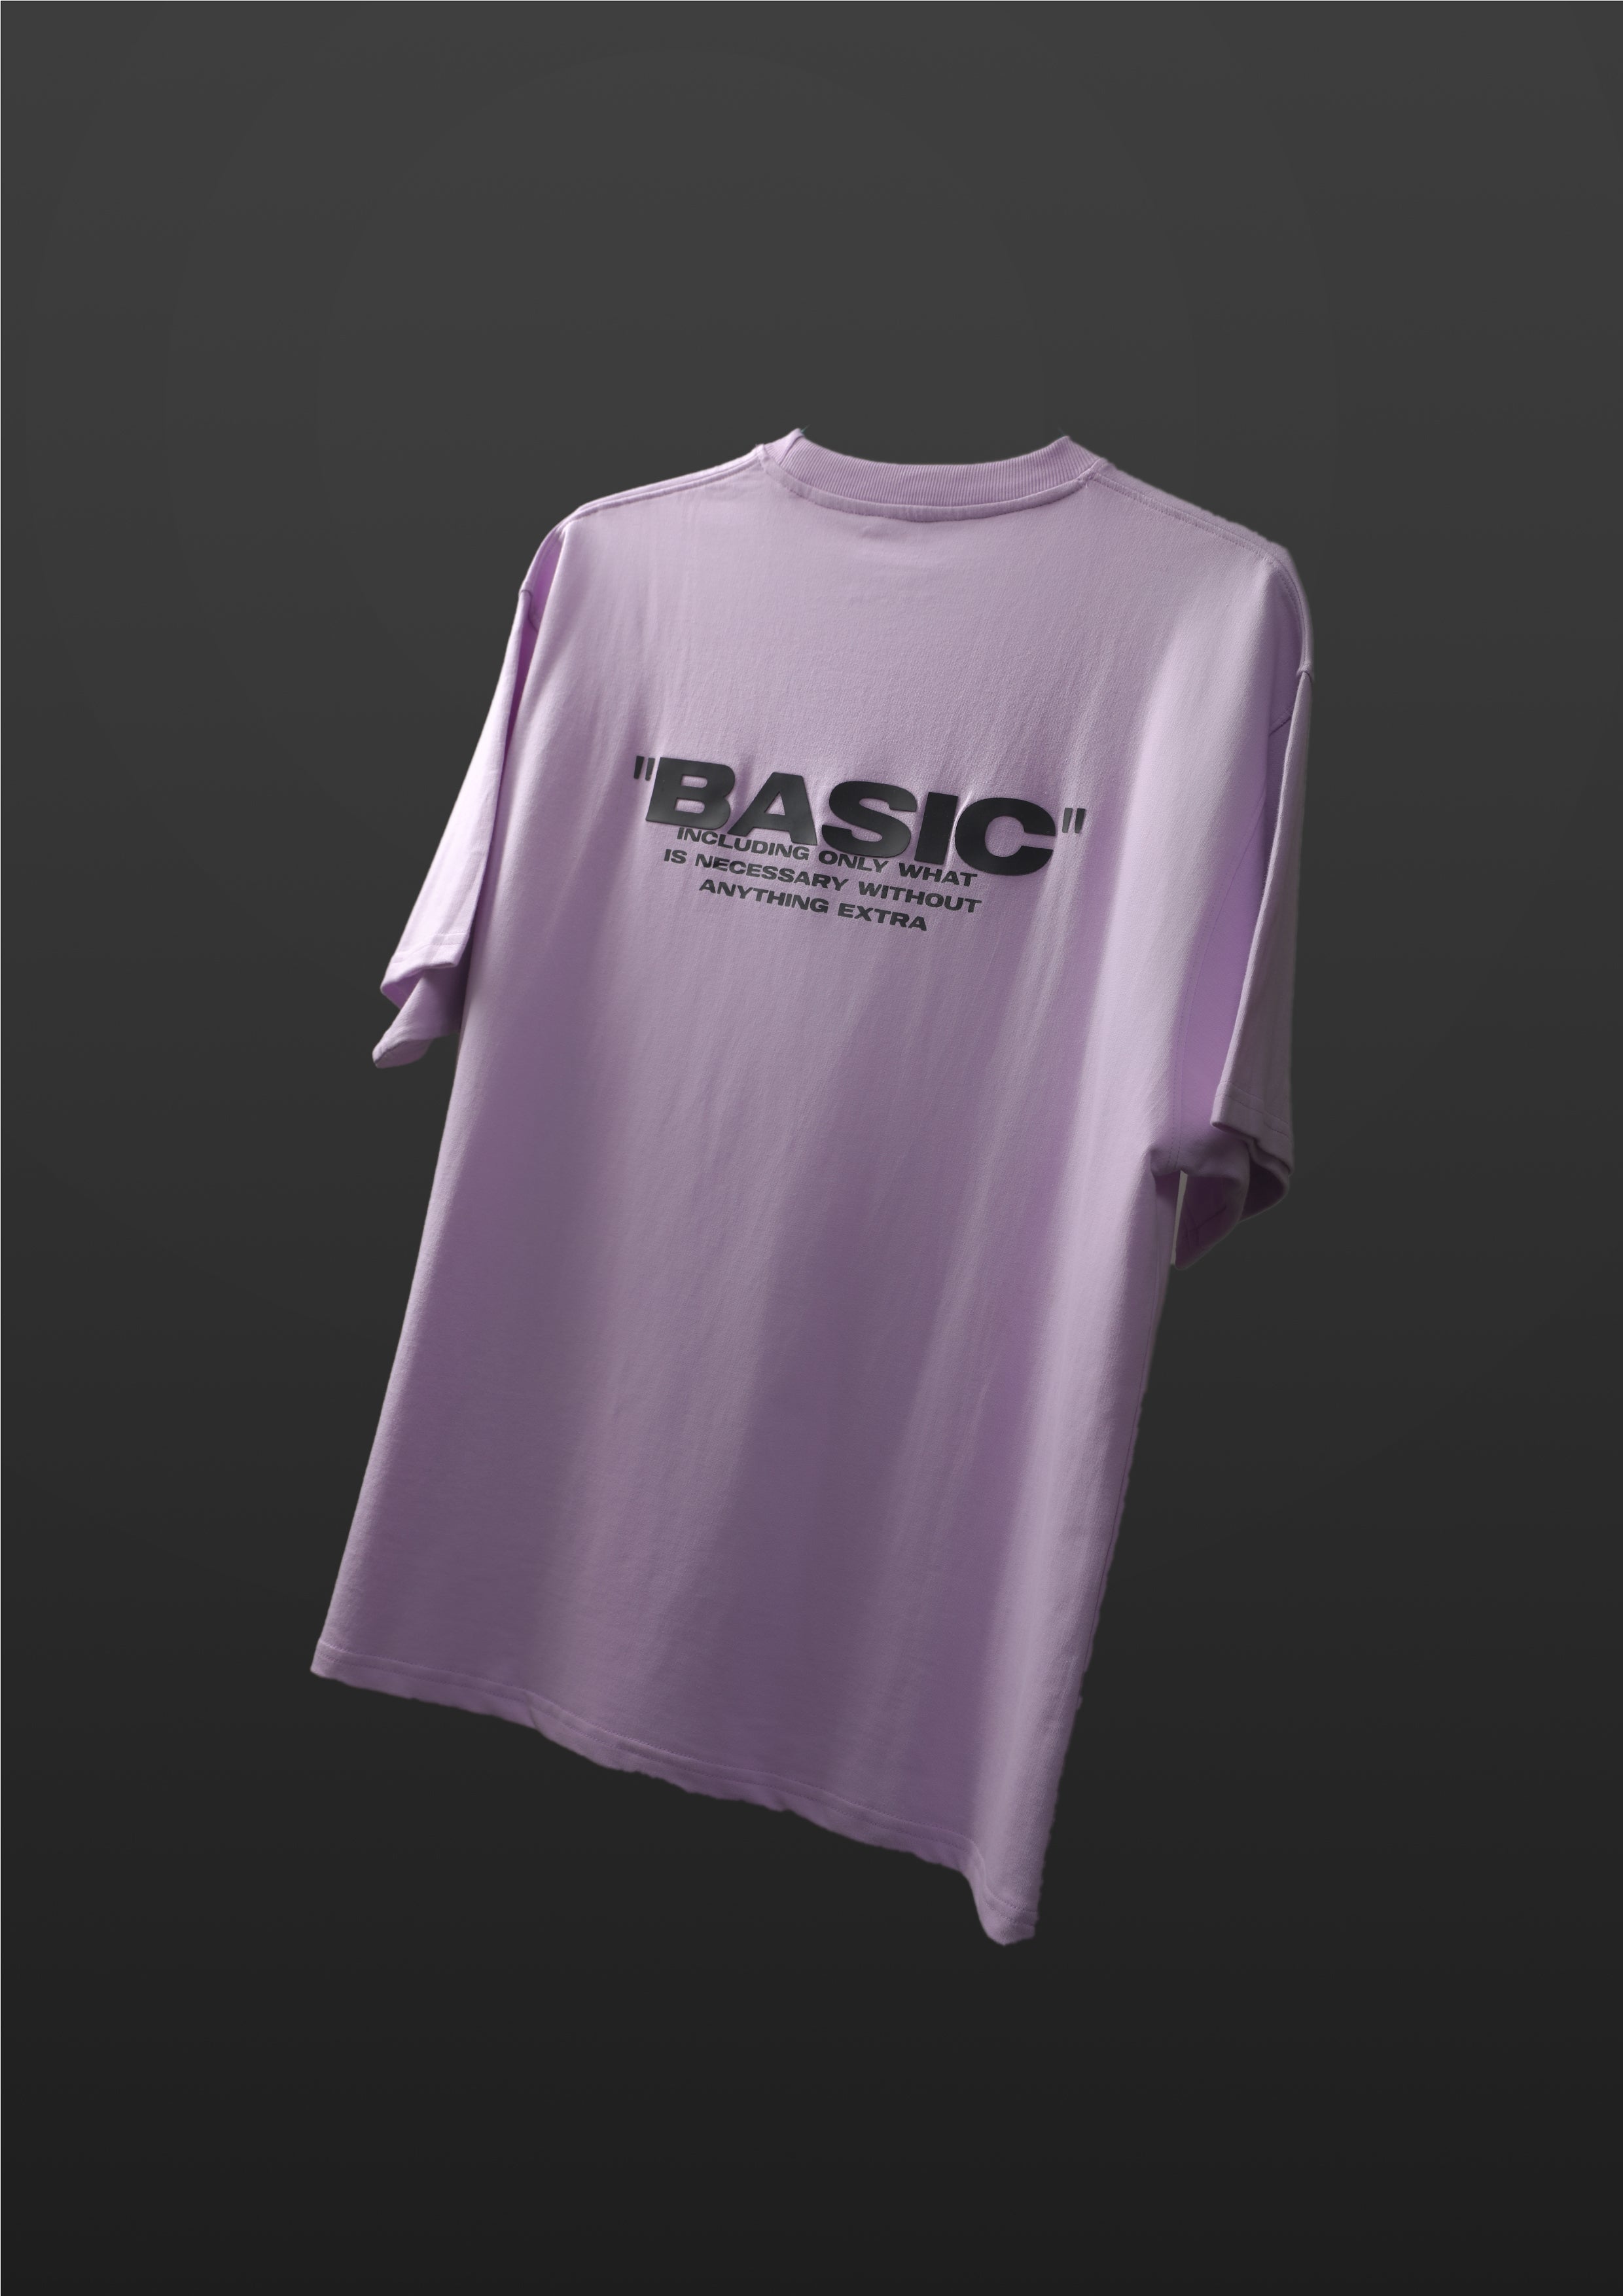 "BASIC" - Chamomile Lavender